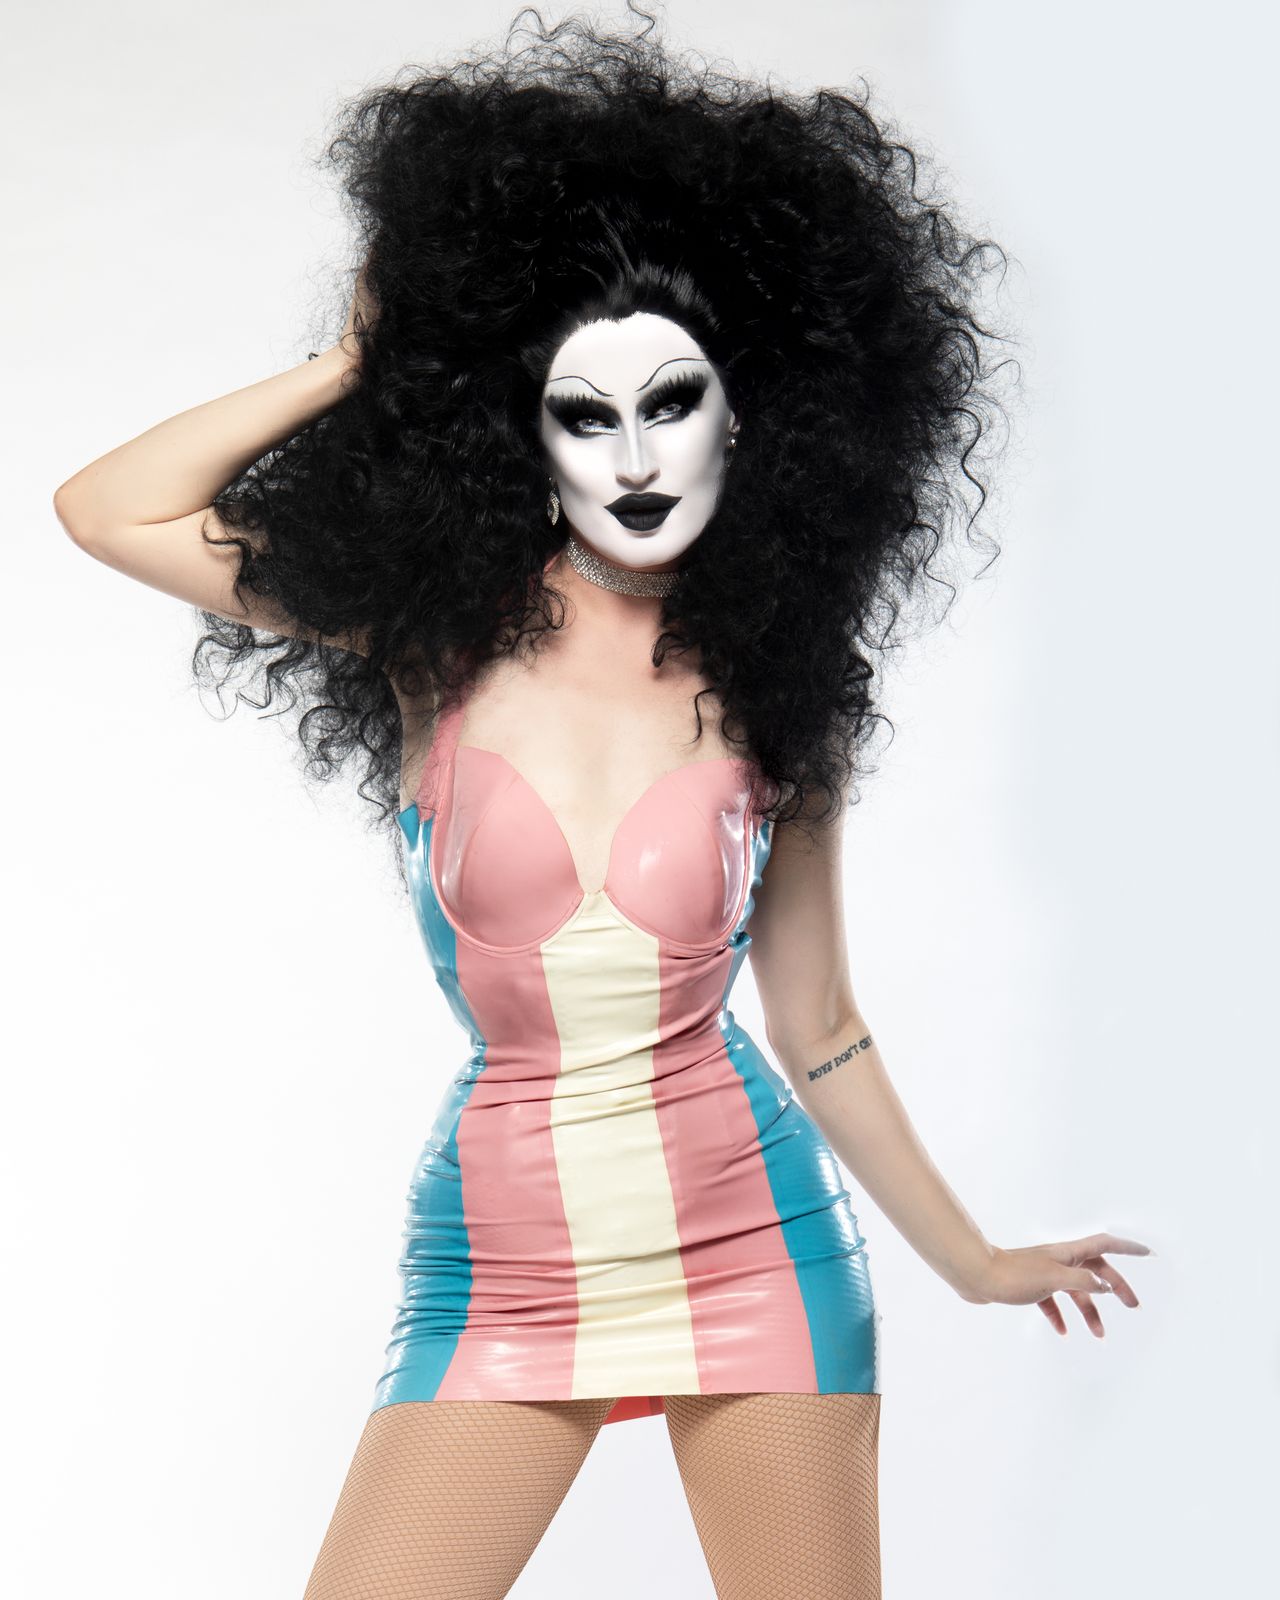 Gottmik made TV history as Drag Race's first ever transmasculine contestant